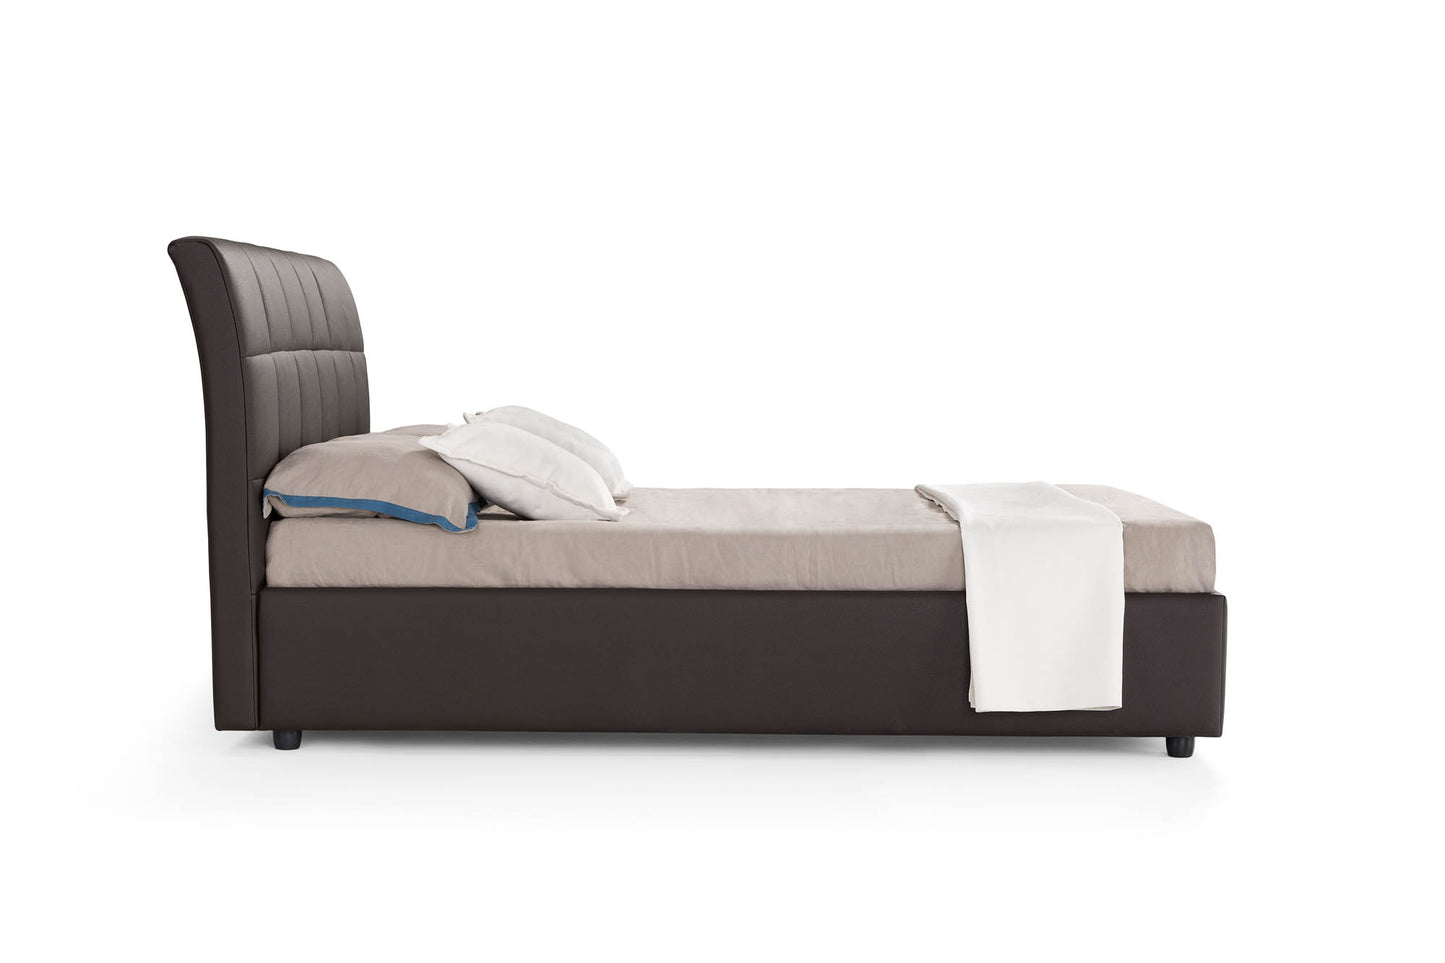 Novaluna Italy - Berlino Bed - Made in Italy - Eurohaus Modern Furniture LLC